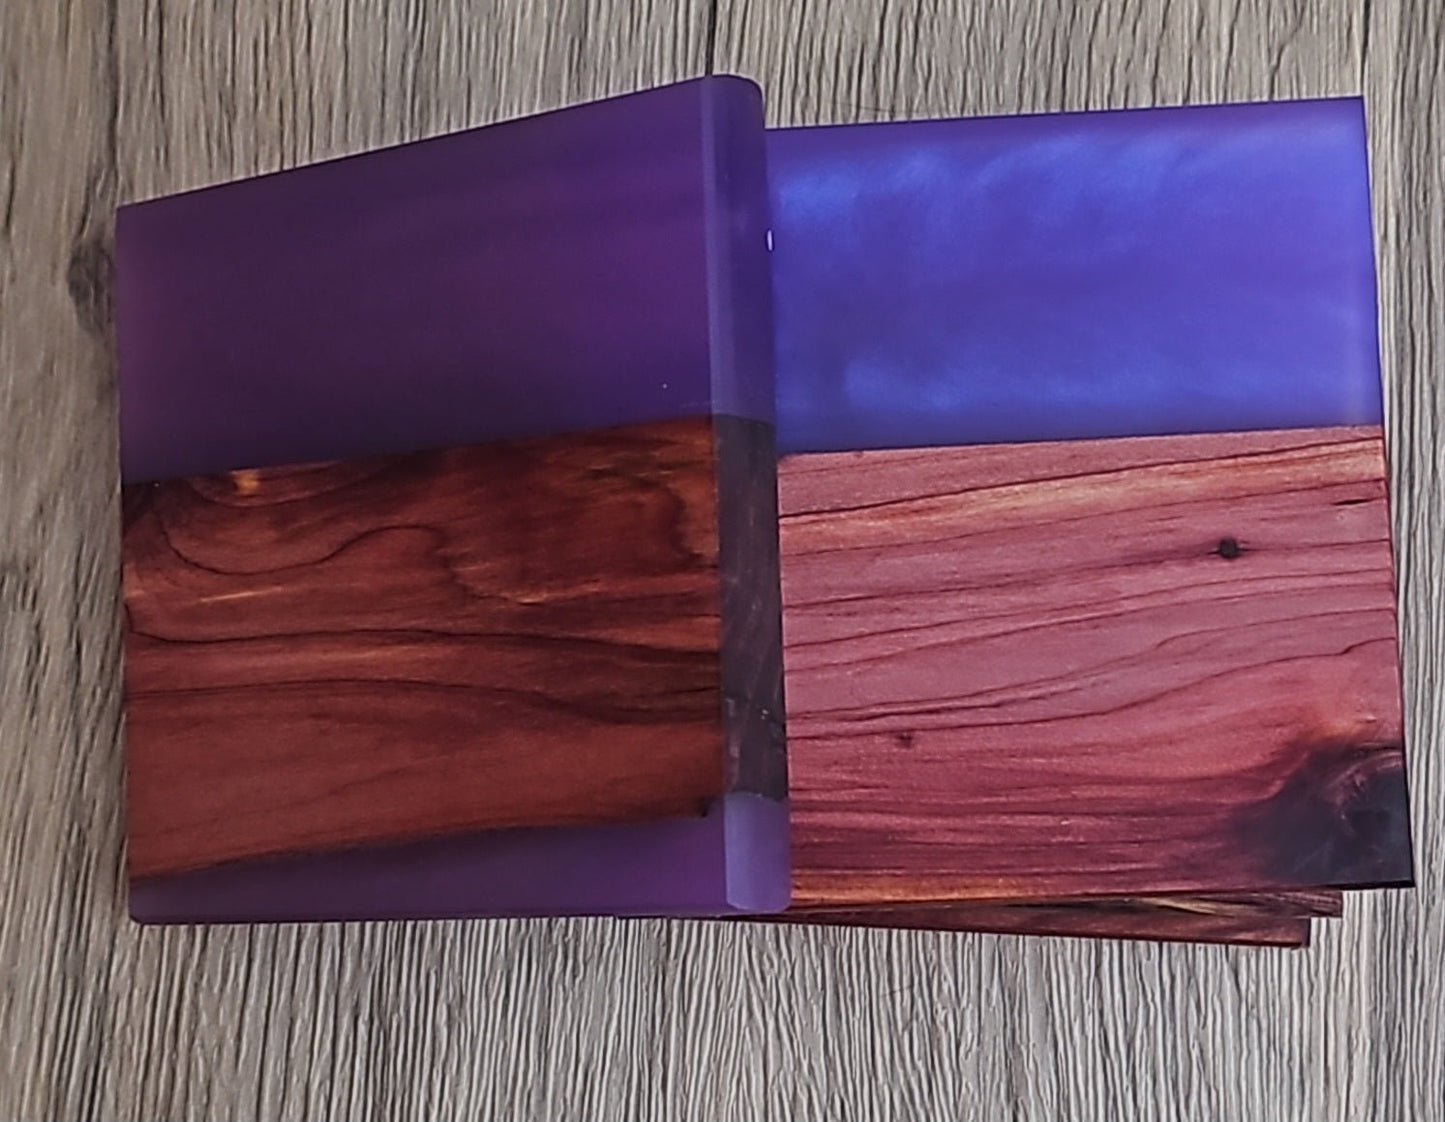 Rosie - Cedar with Violet/Light Purple Epoxy Coaster